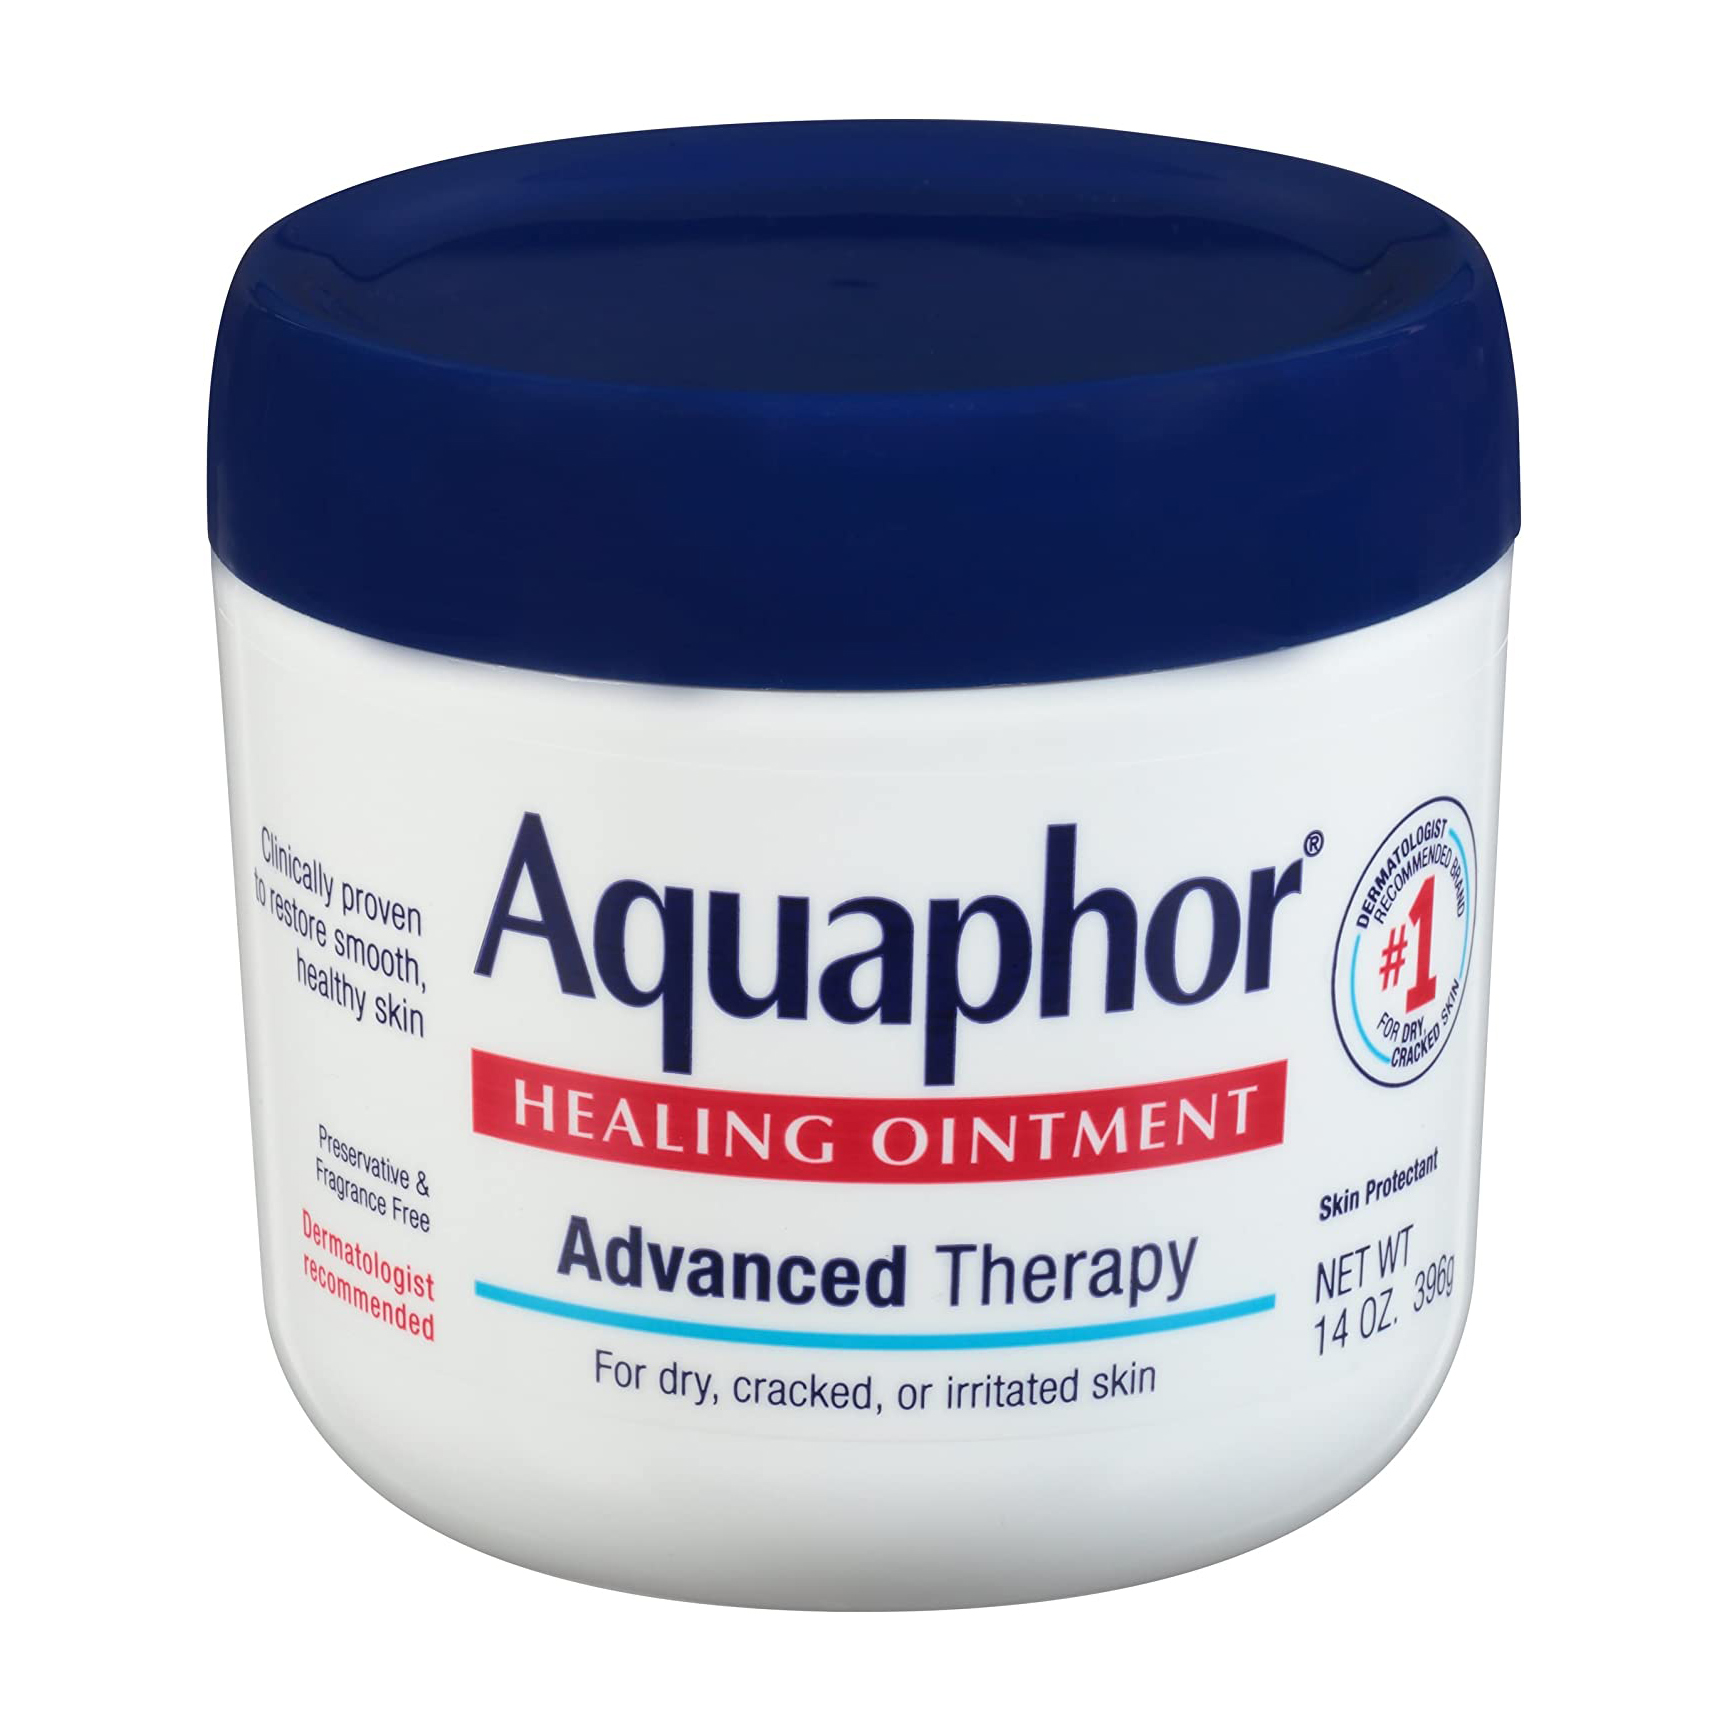 aquaphor healing ointment review highlight